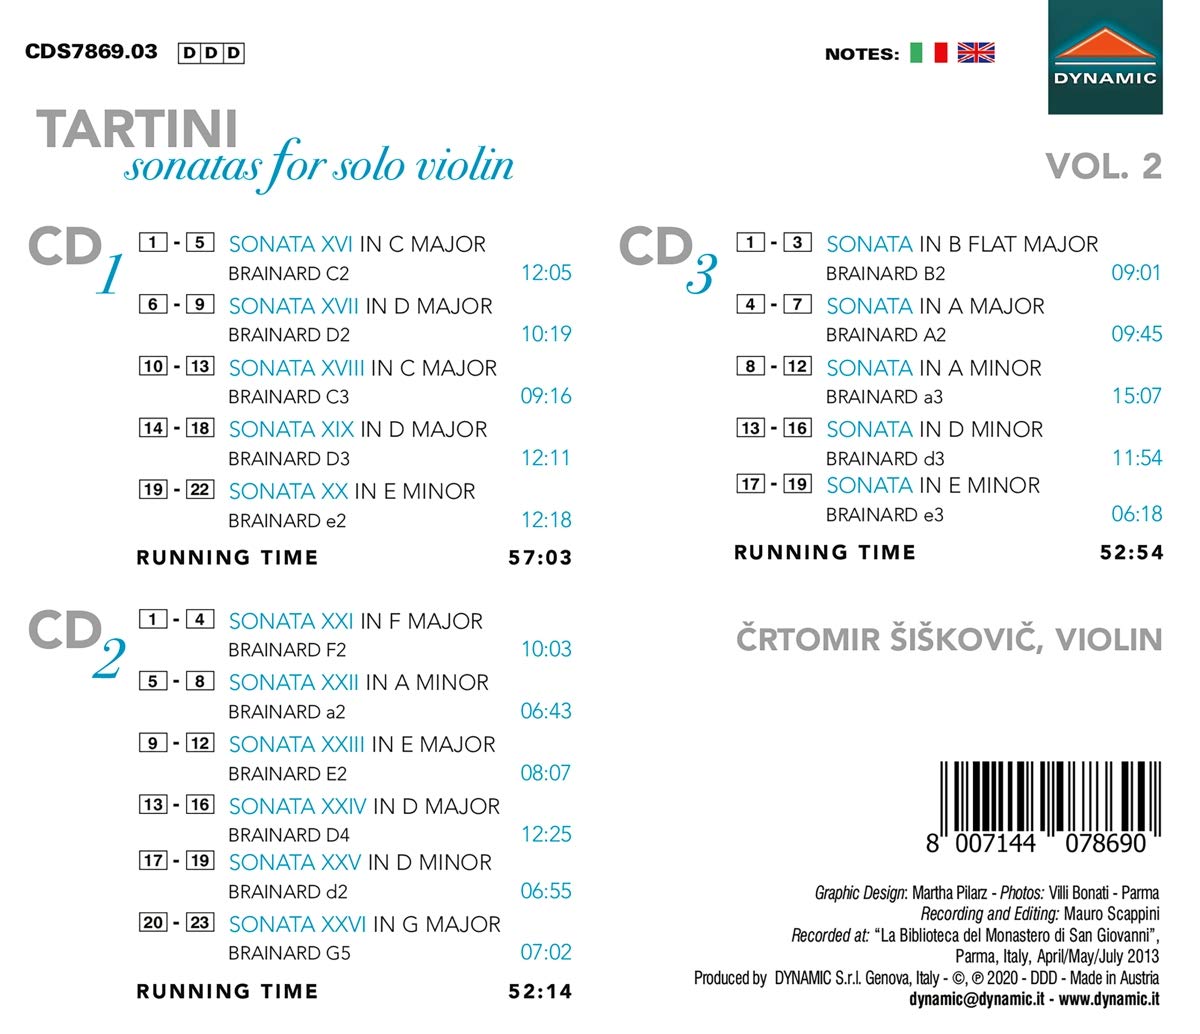 Crtomir Siskovic 타르티니: 무반주 바이올린 소나타 2집 (Tartini: Sonatas for solo violin Vol. 2)